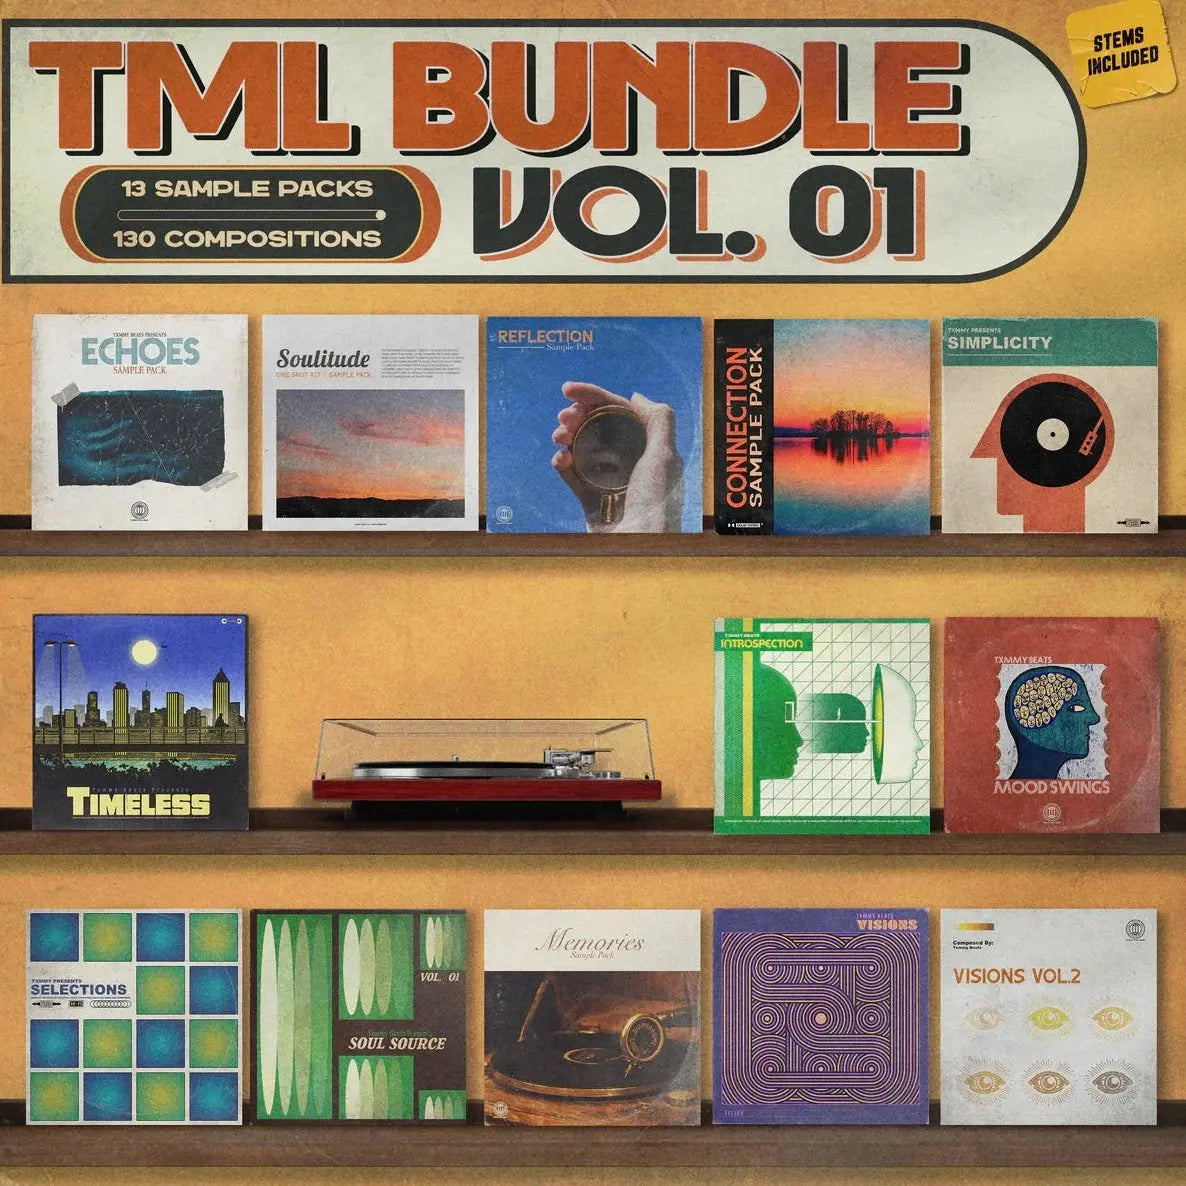 TML Bundle Vol. 1